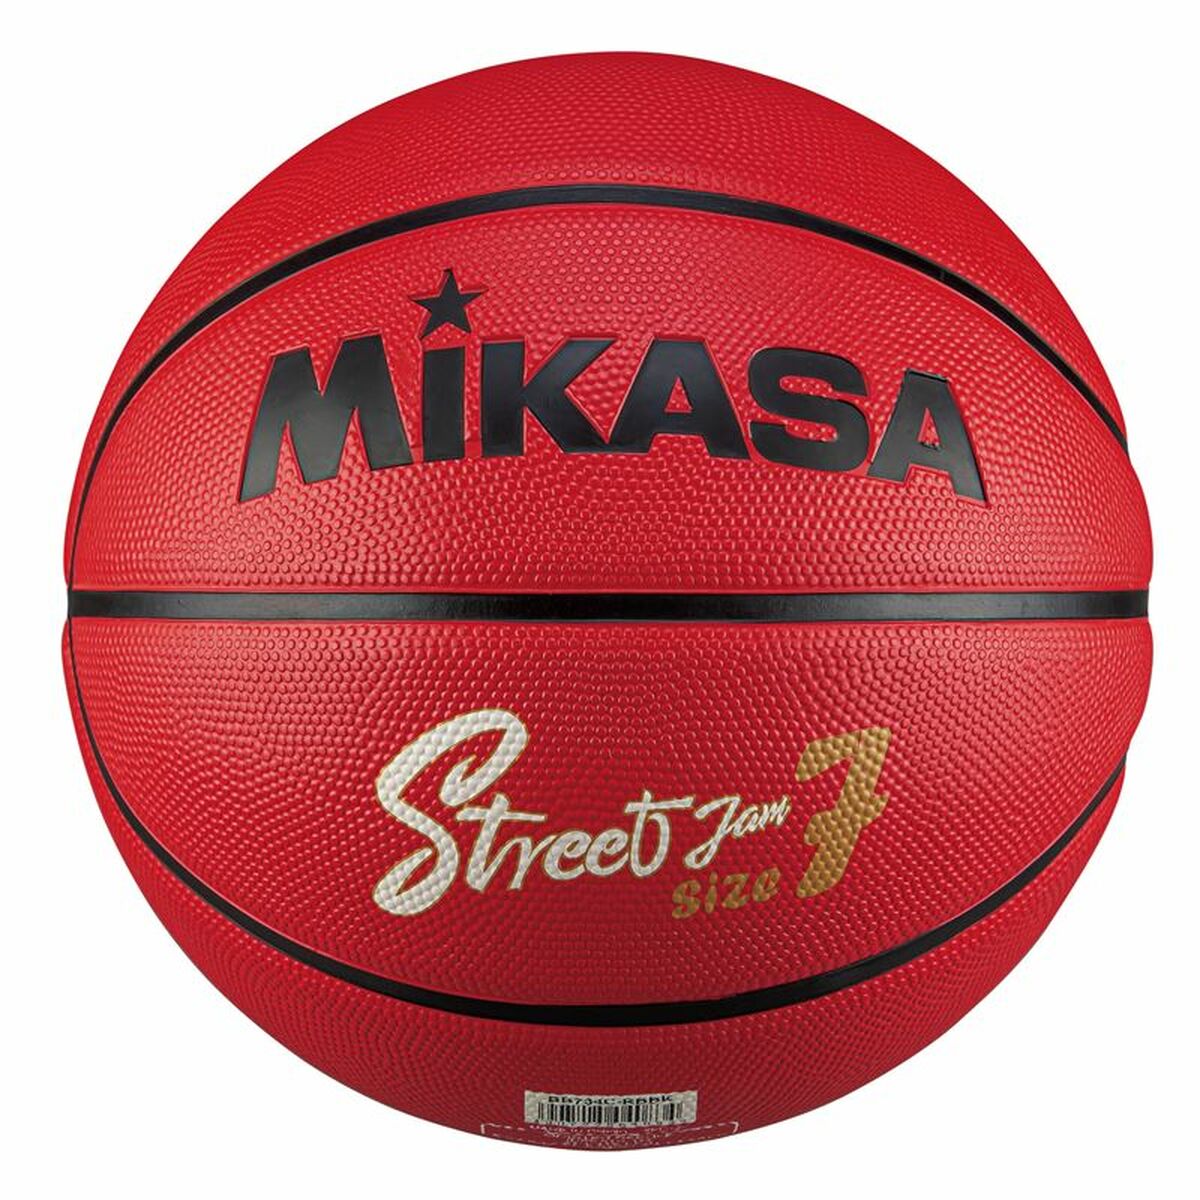 Basketball Ball Mikasa BB634C  6 Years